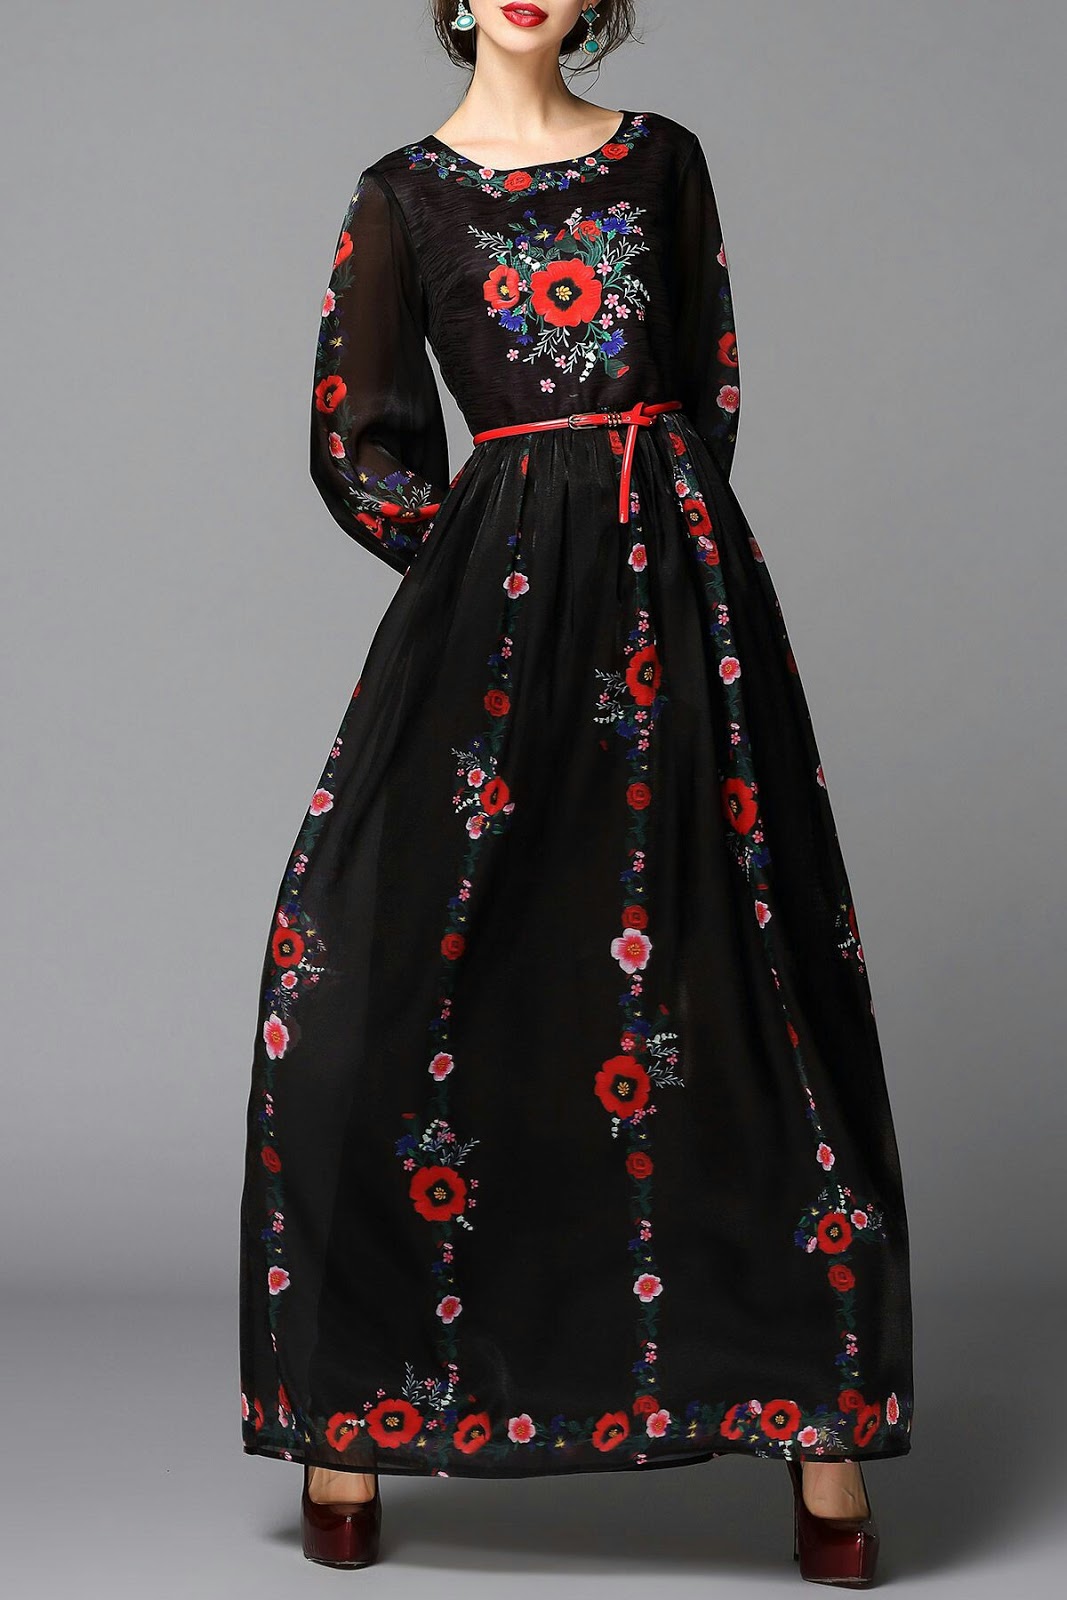 Fαshiση Gαlαxy 98 ☯: Floral printed long dress